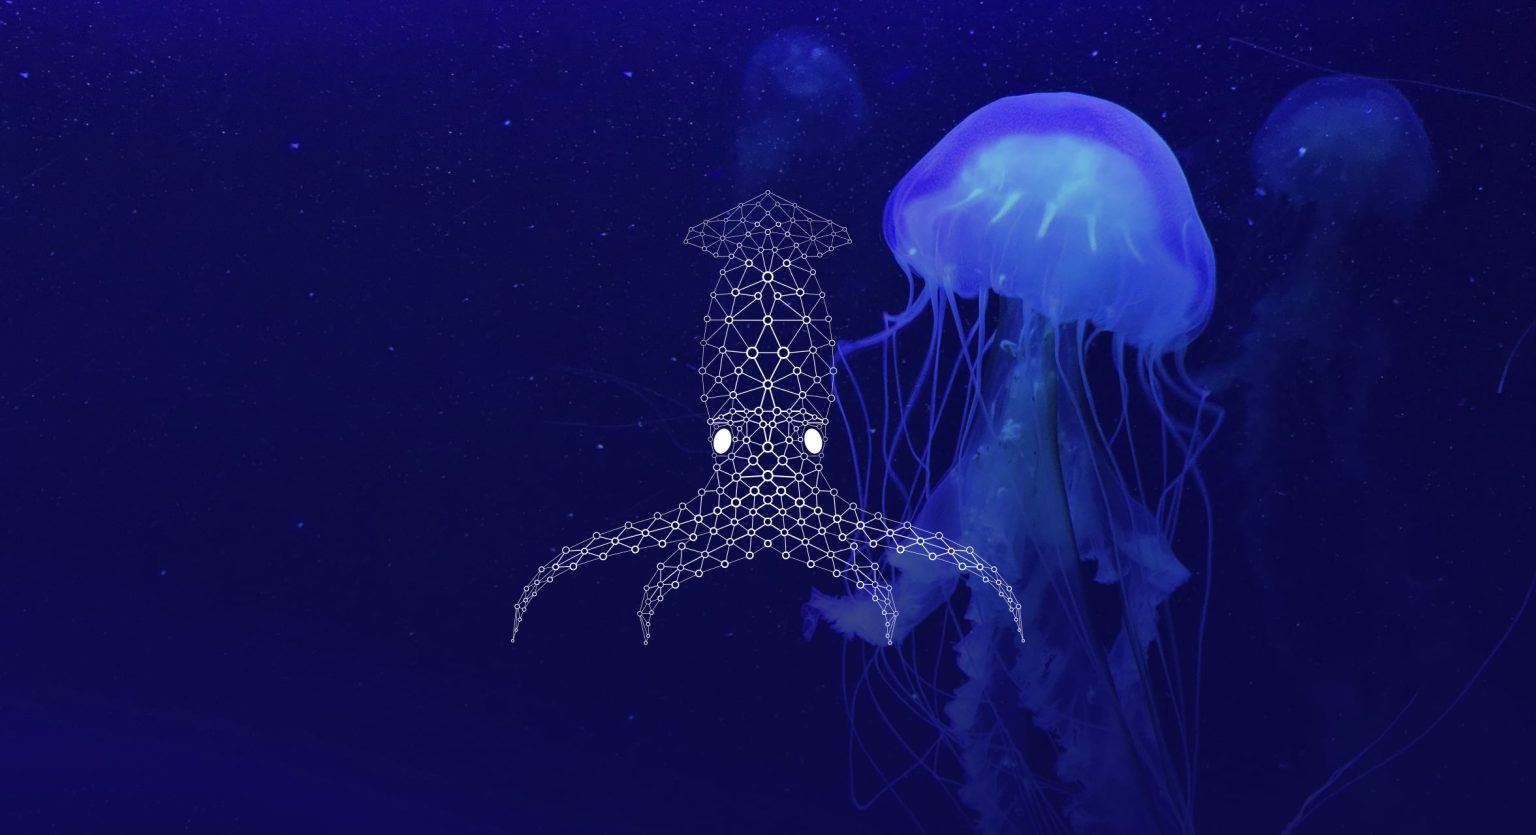 Jellyfish and FathomNet squid logo